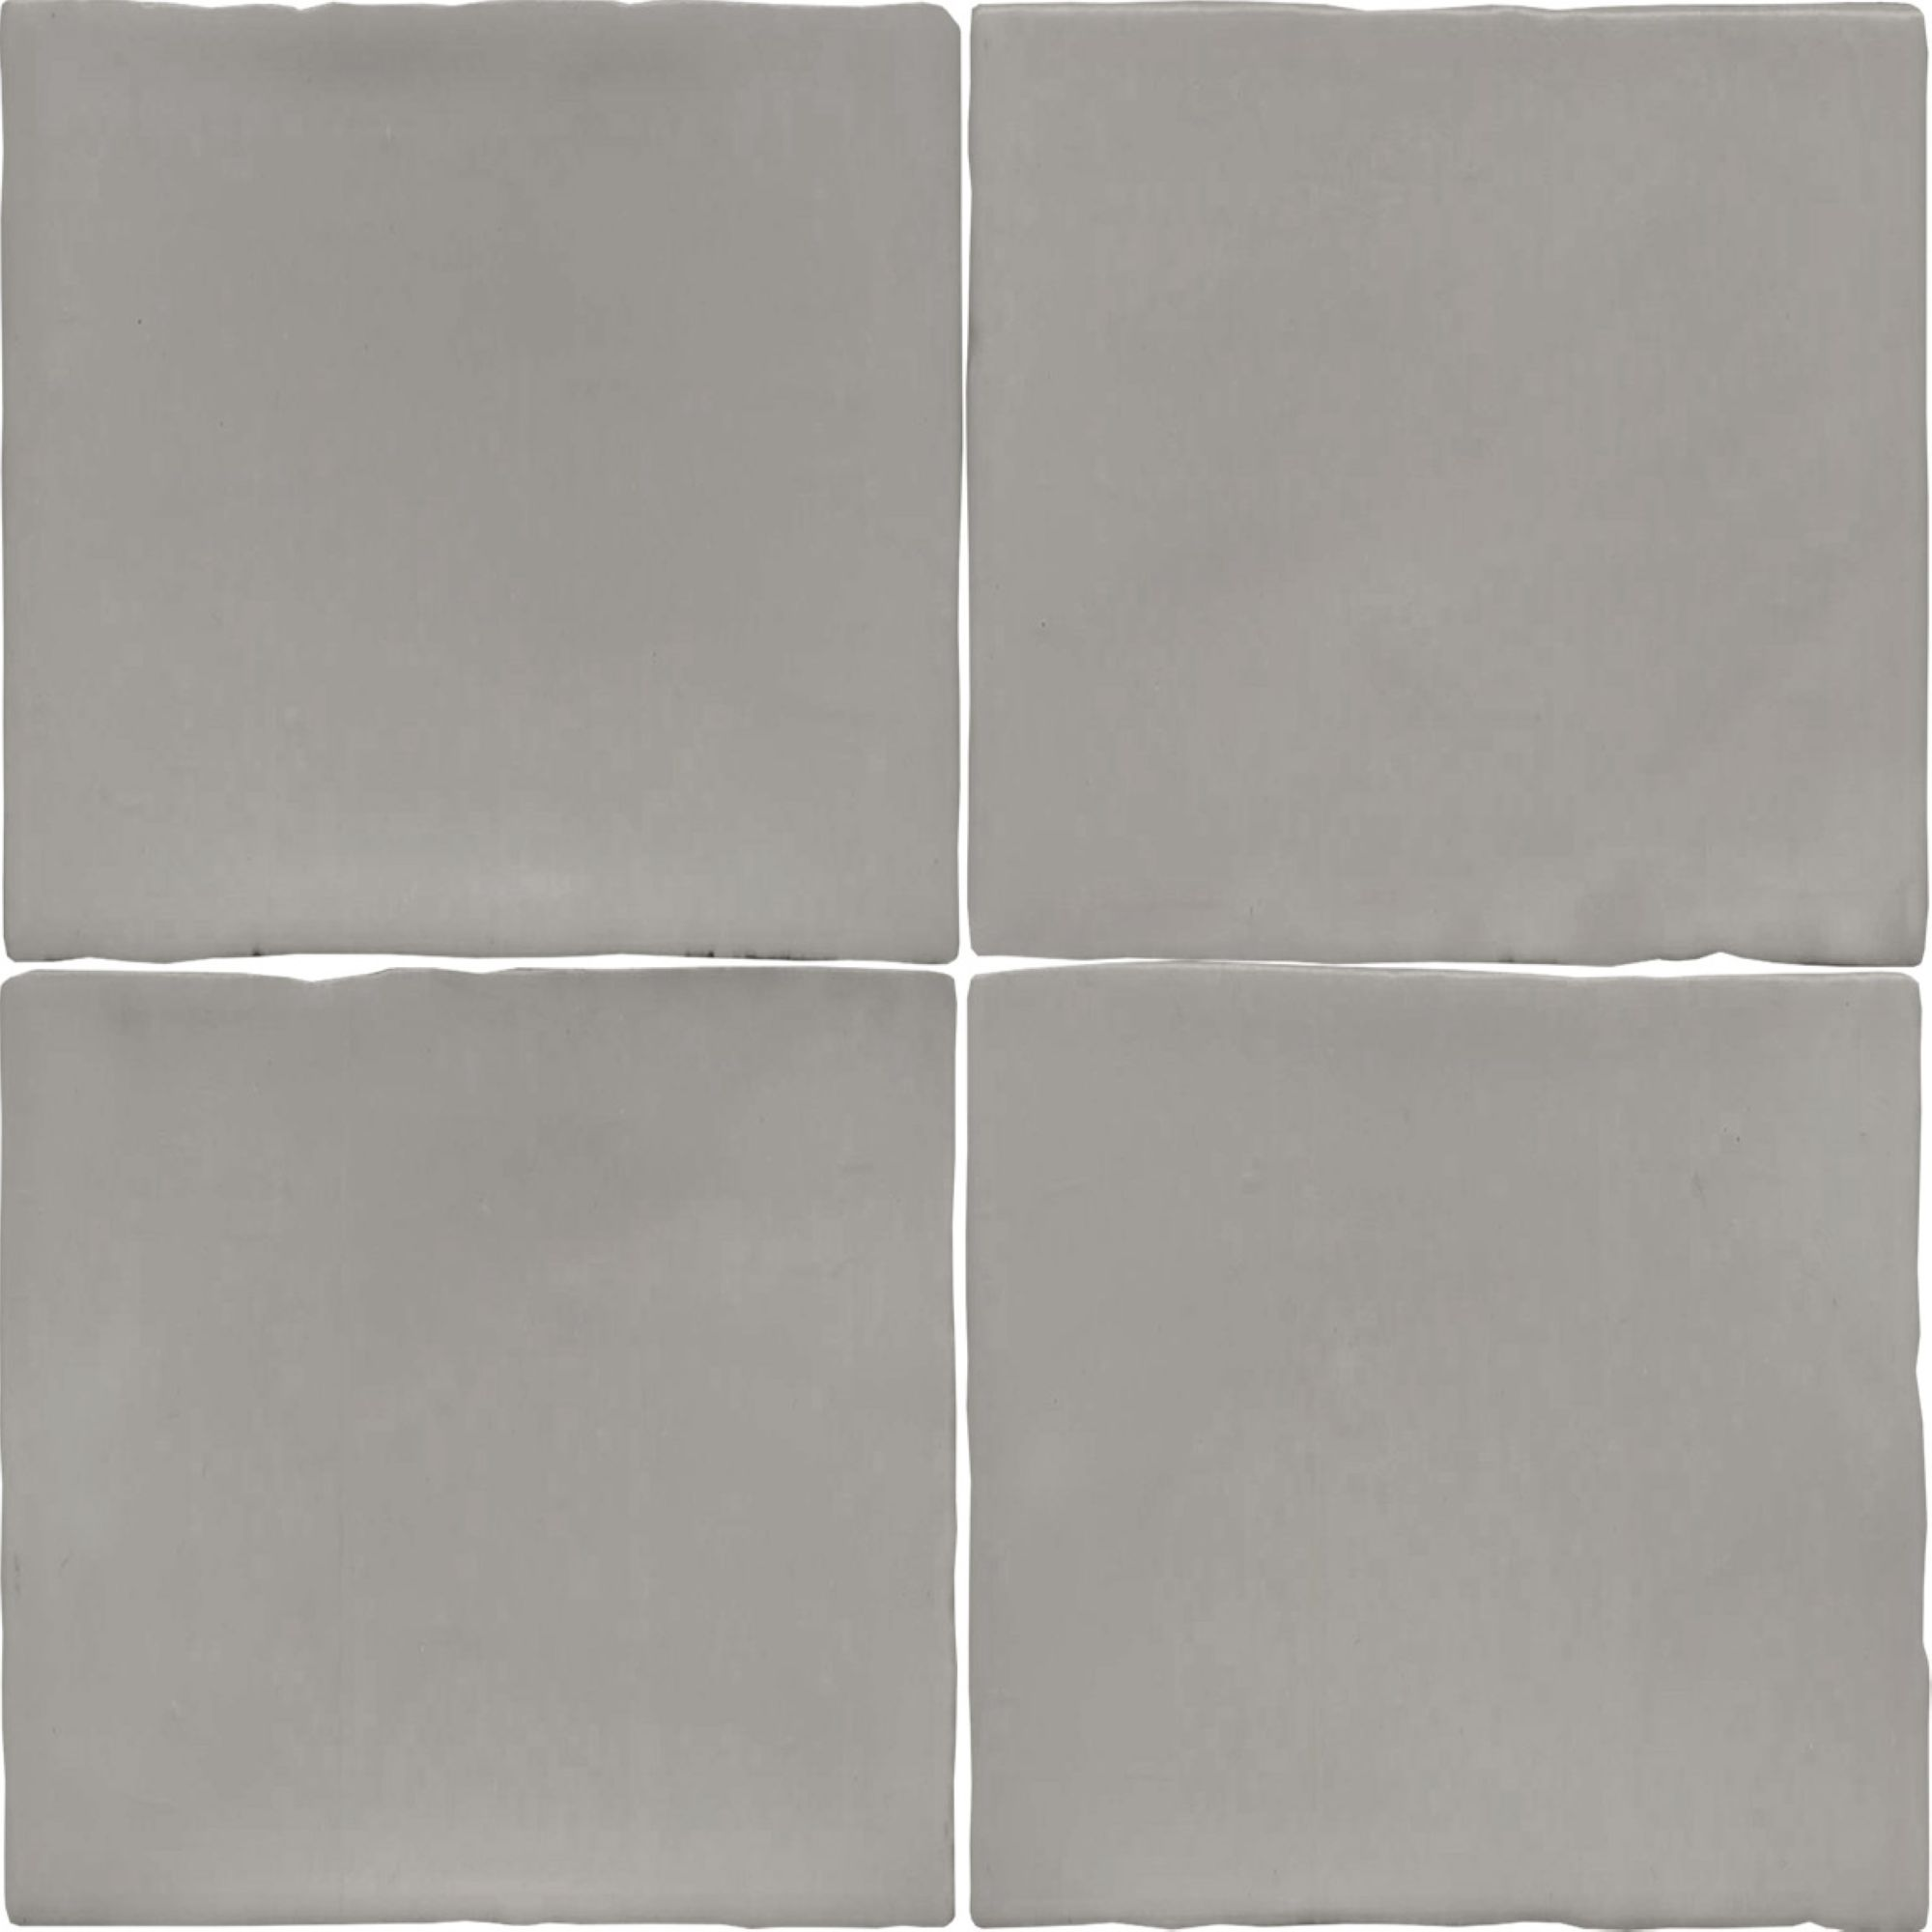 Wandfliese 'Crayon' grau matt 13 x 13 cm + product picture